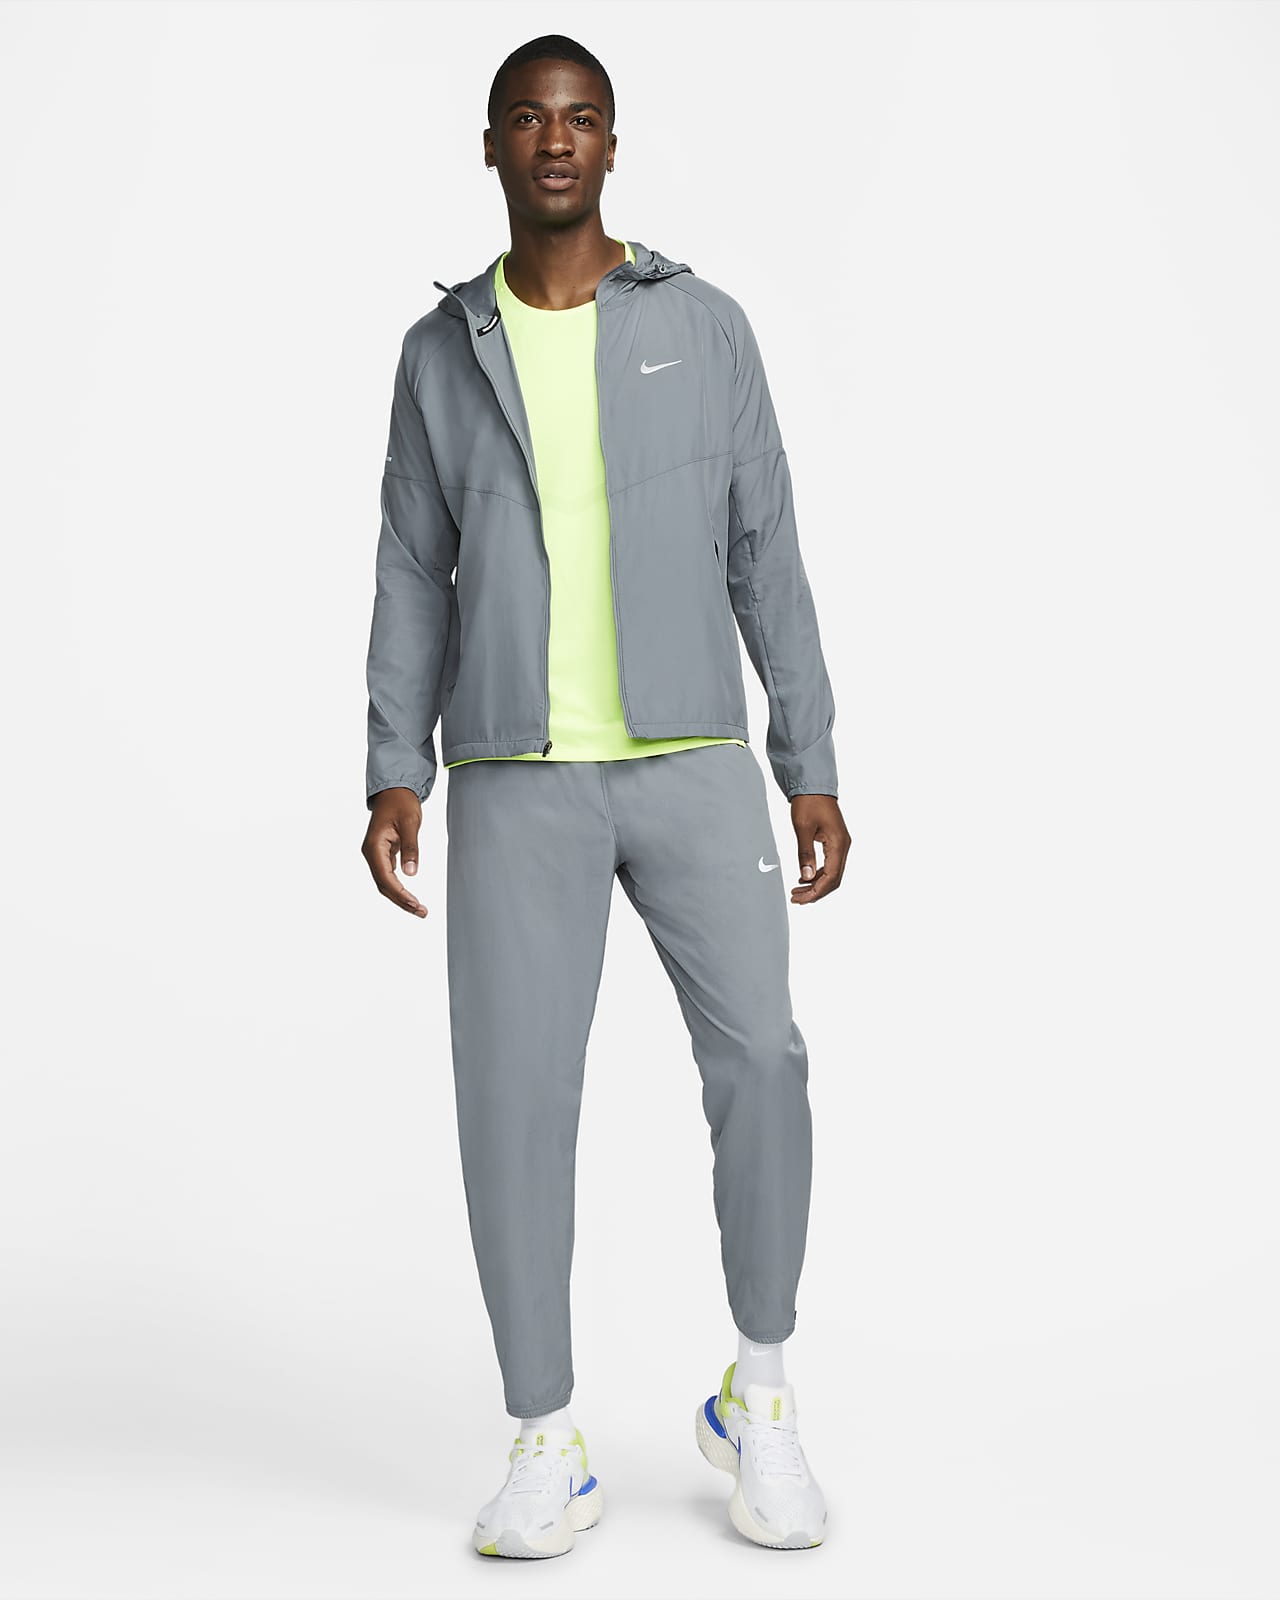 Men\'s Jacket. Miler Nike Repel Running